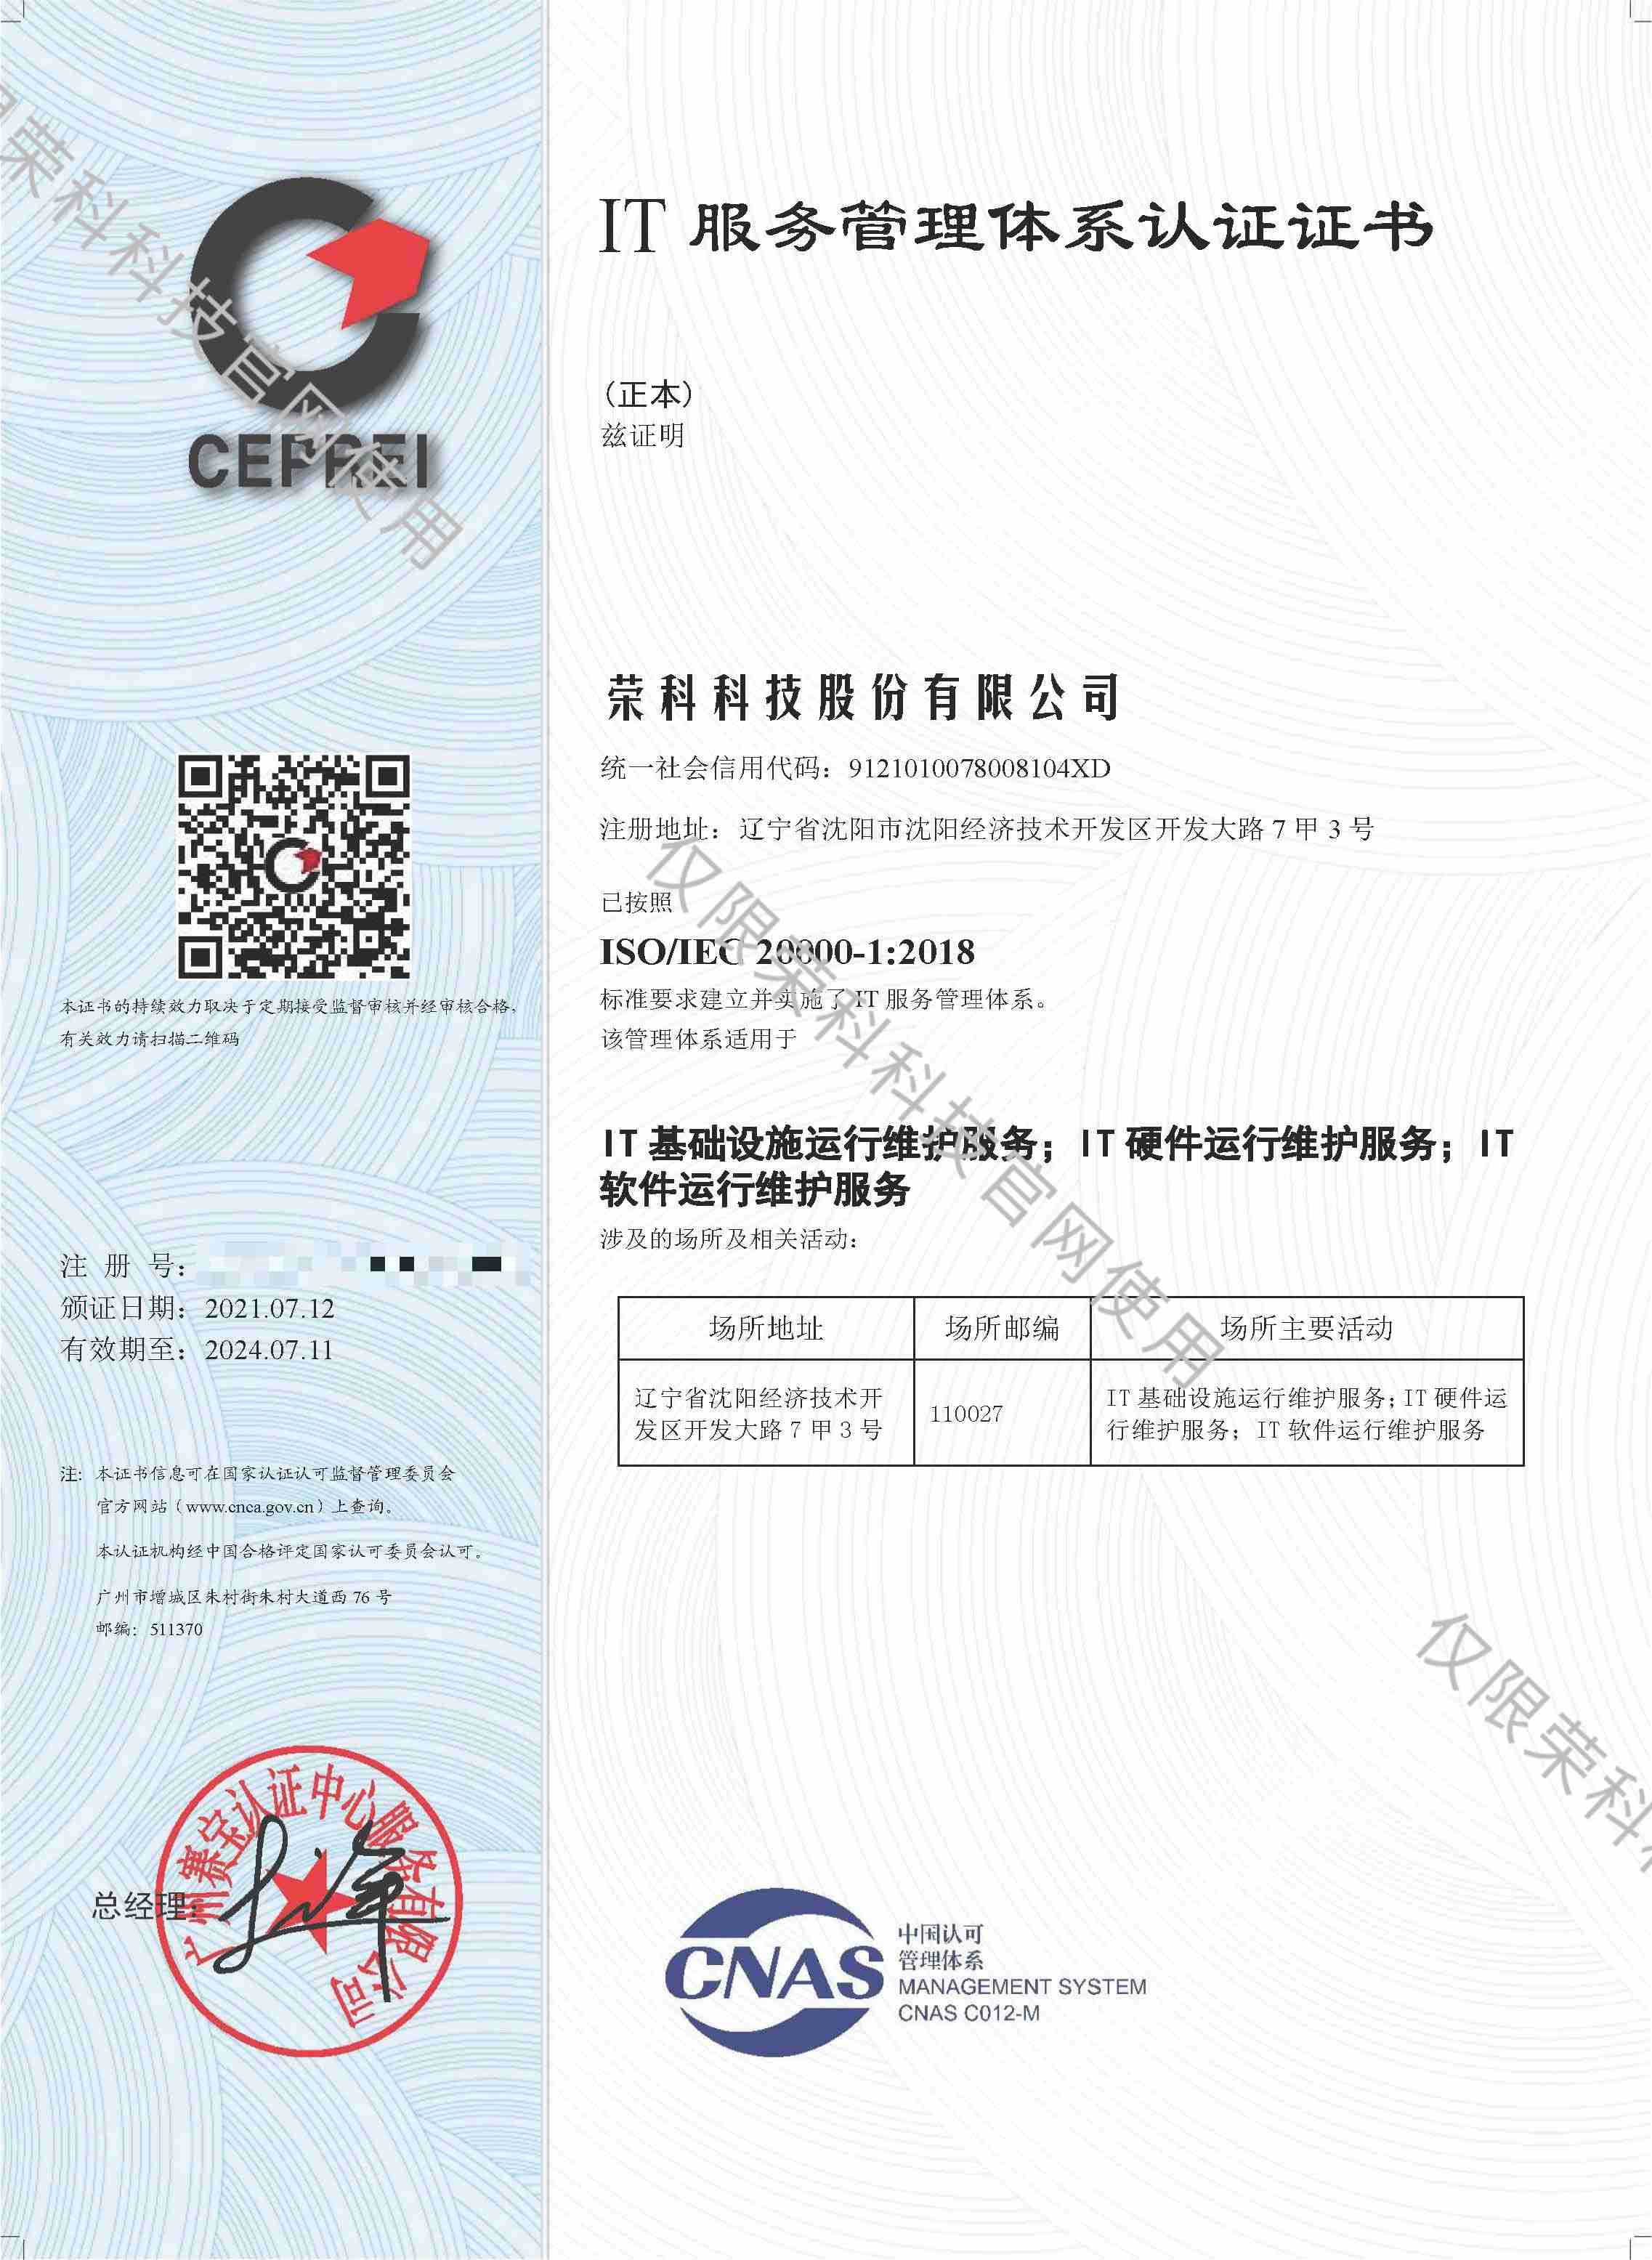 IT火狐电竞
管理体系认证证书